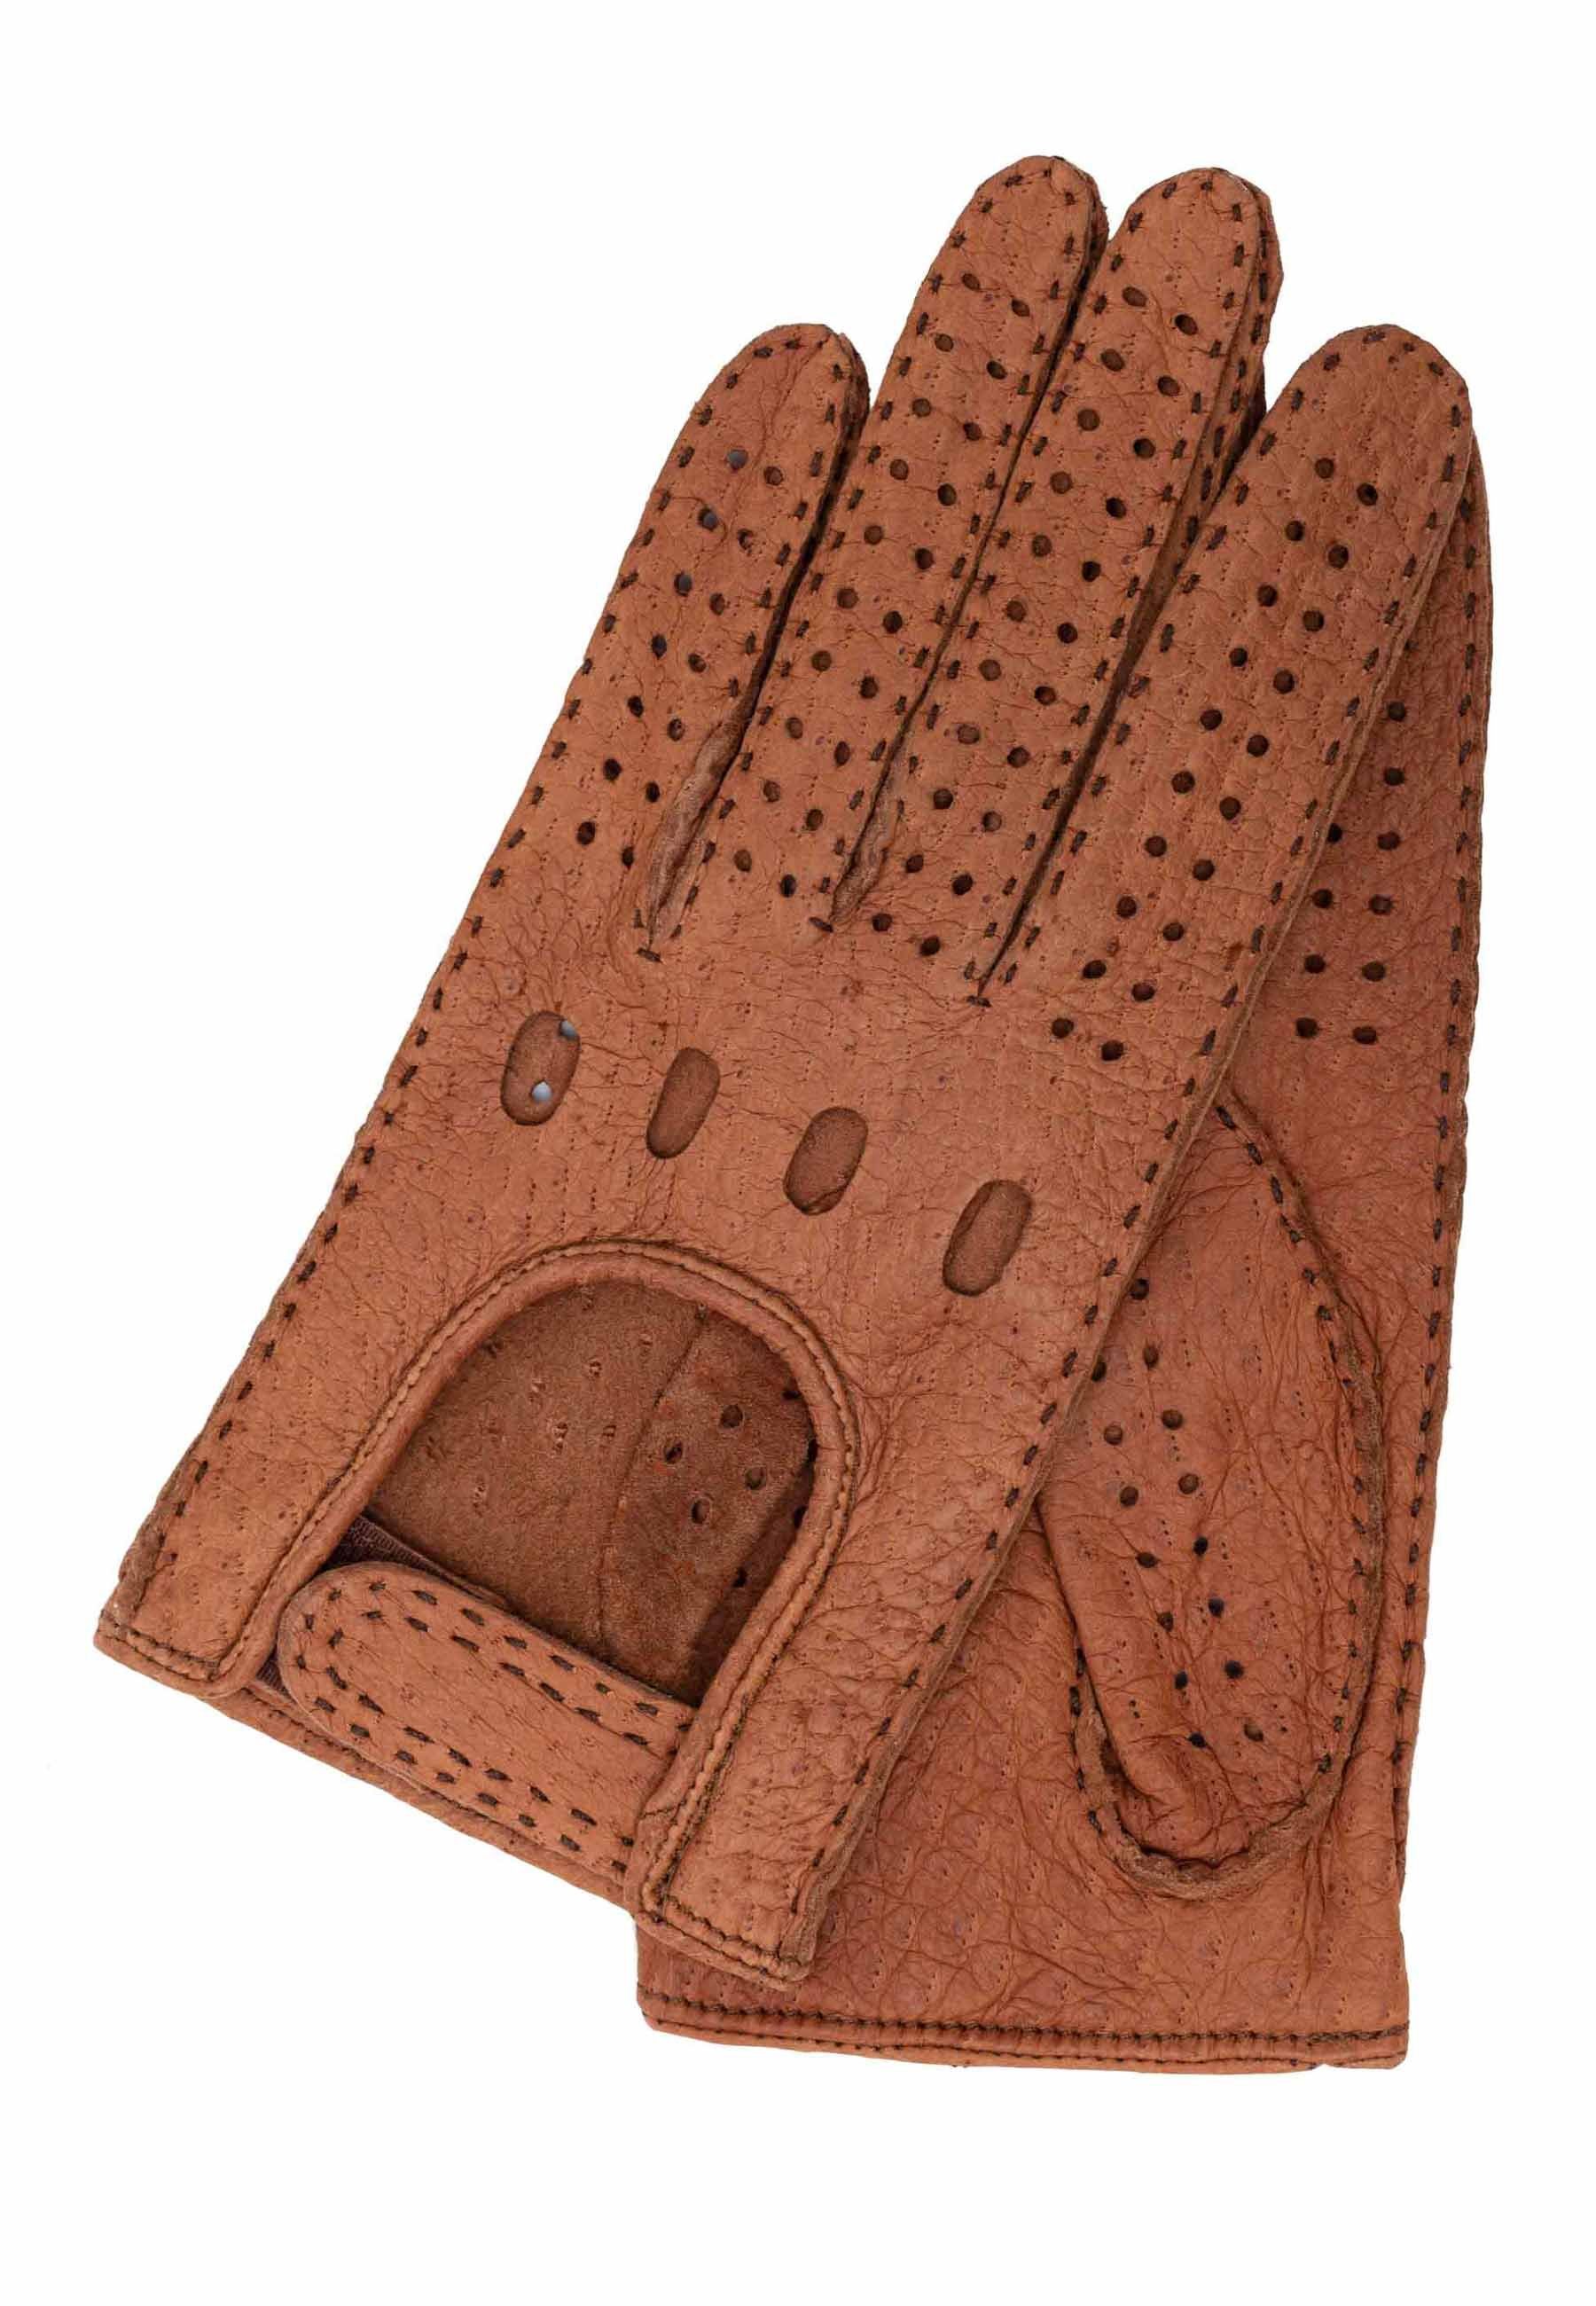 Peccary Womens Driving klassischem in GRETCHEN Lederhandschuhe Autohandschuh-Design Gloves bronzefarben